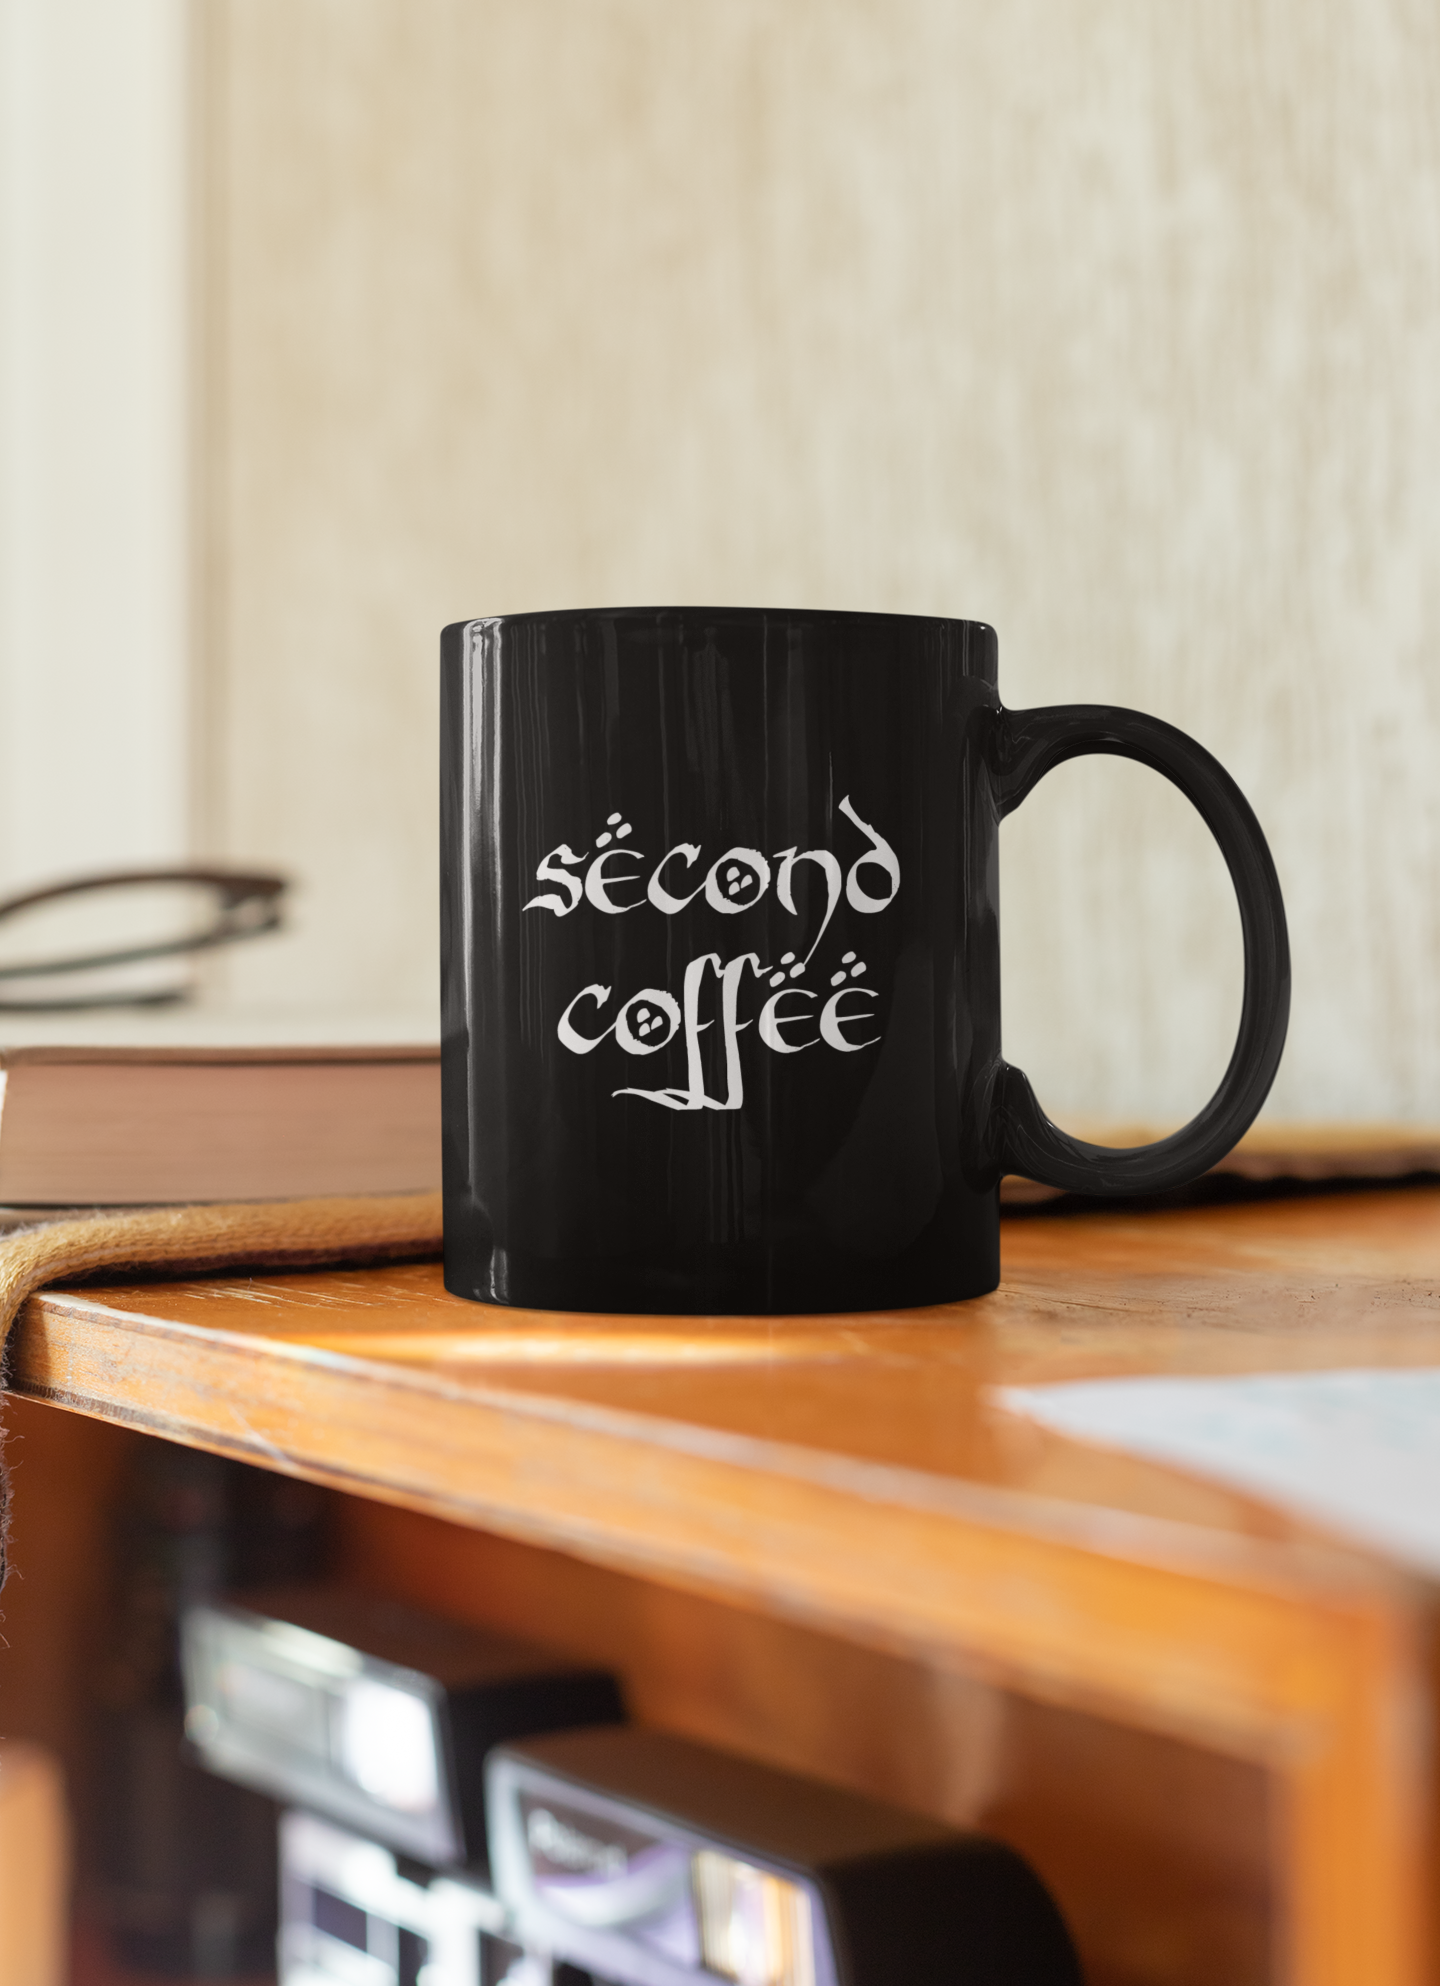 Second Coffee Mug 11 oz, Nerdy Gift, Funny Gift